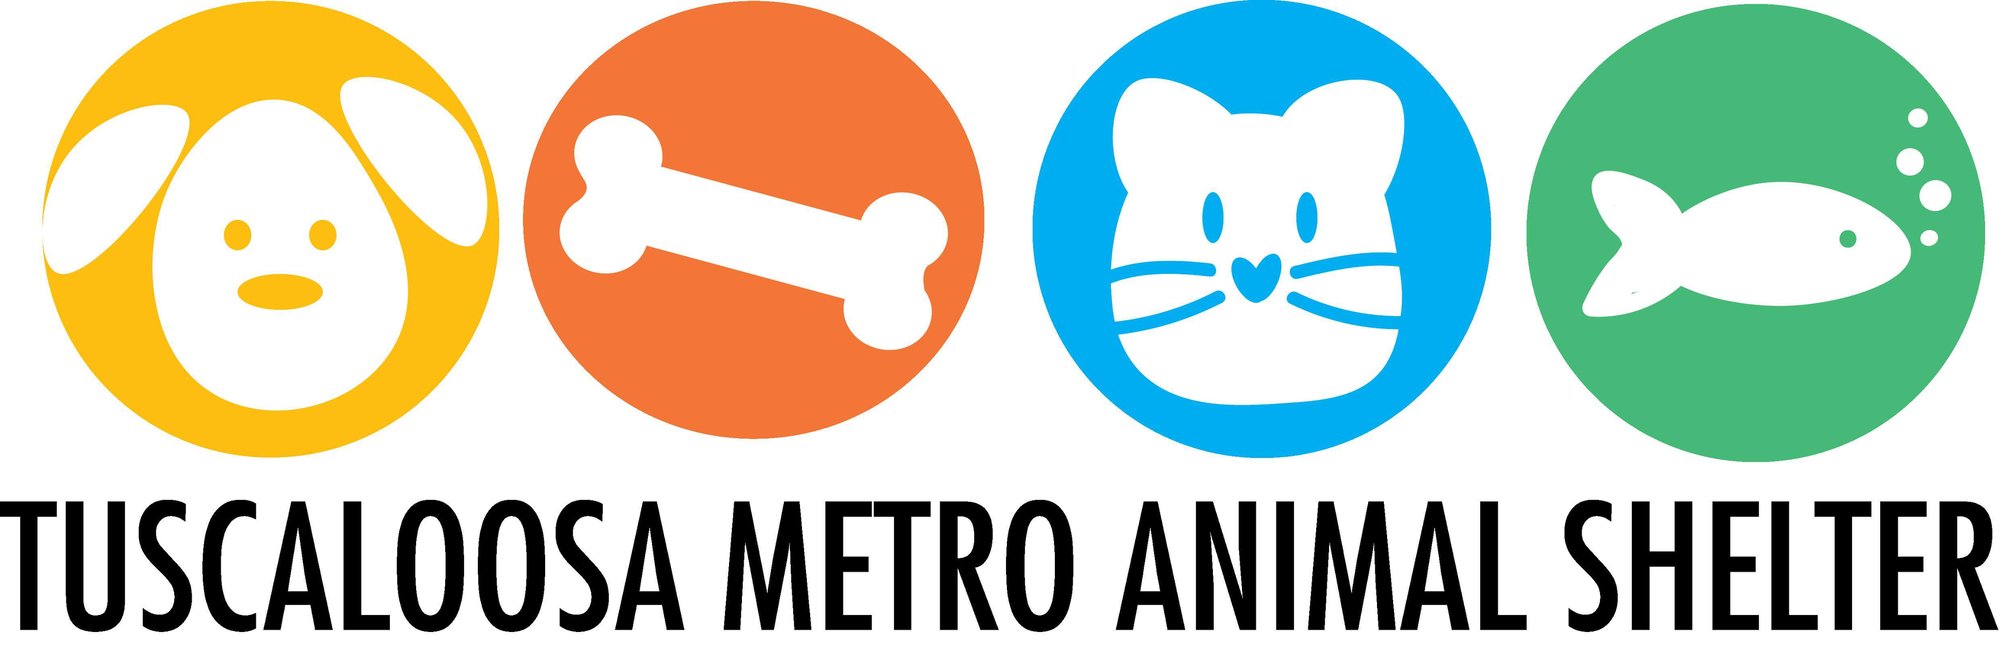  Tuscaloosa Metro Animal Shelter logo